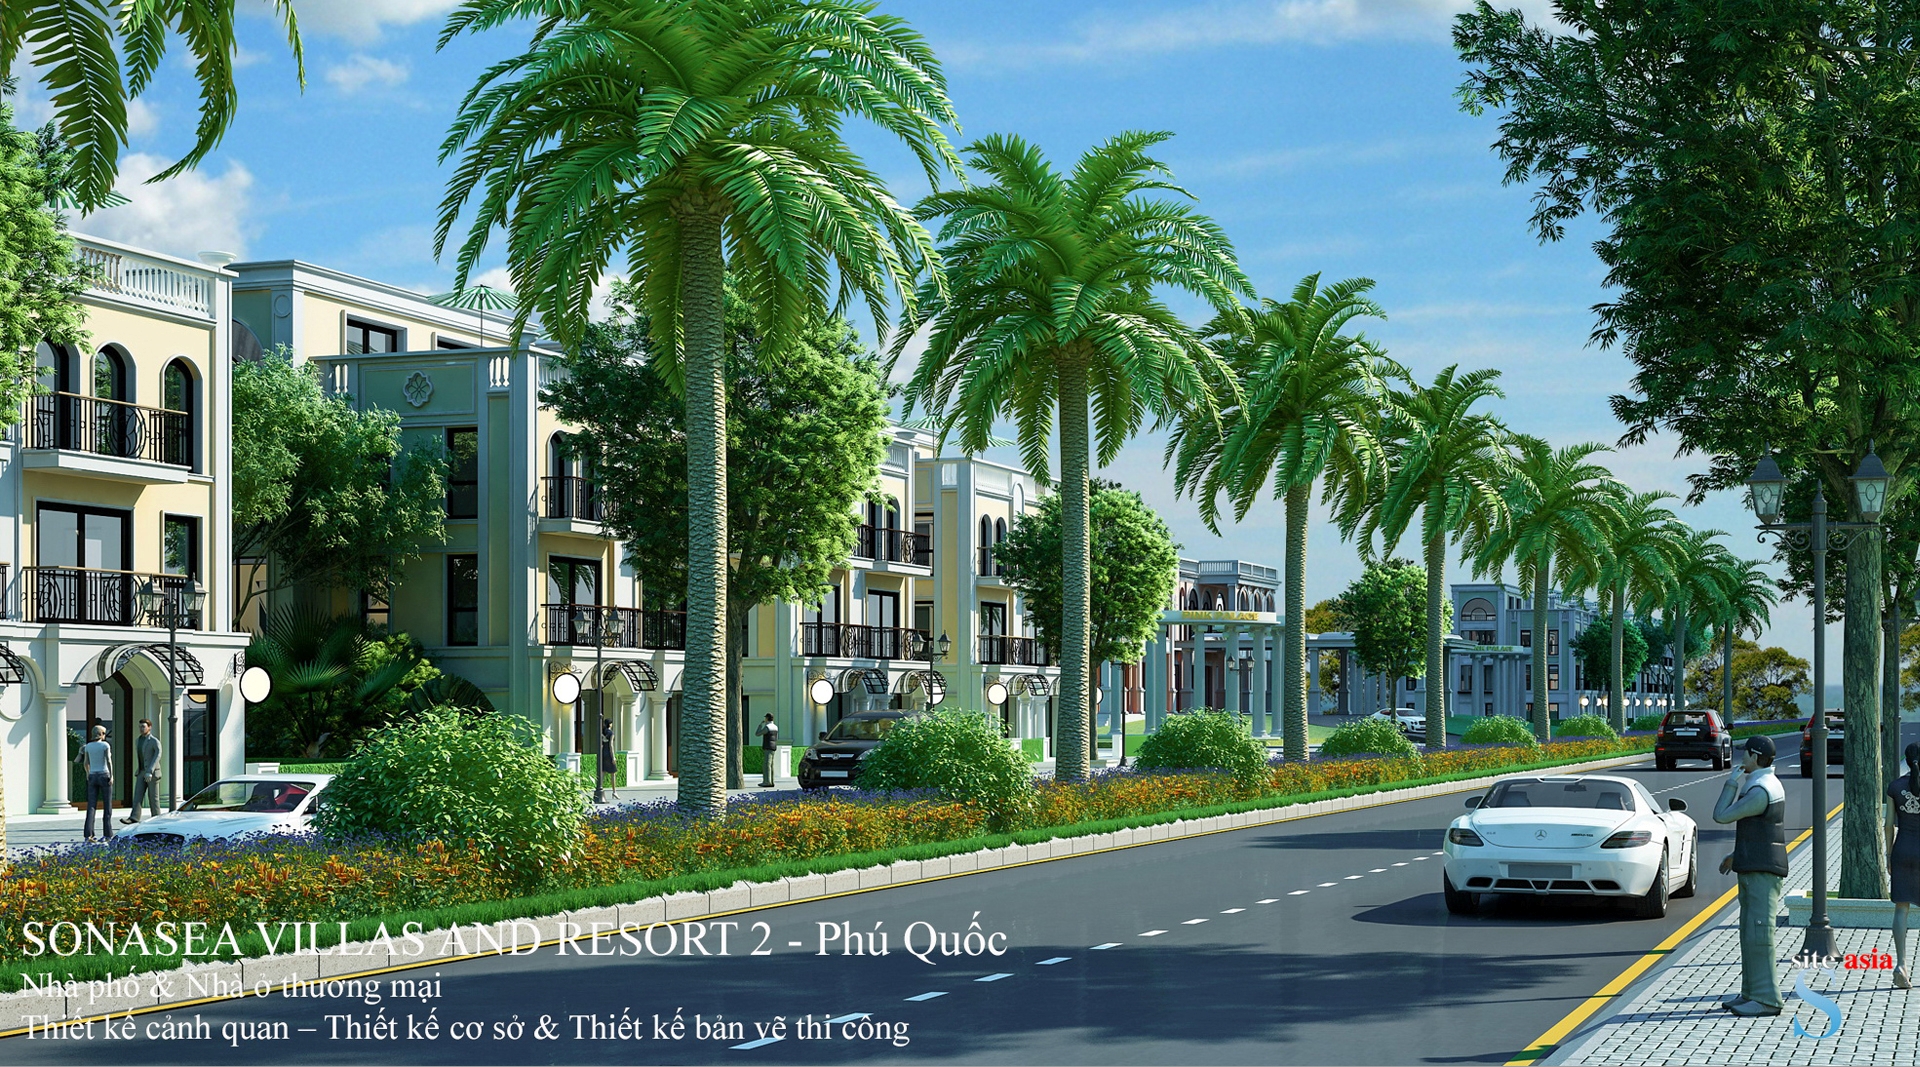 Sonasea Villas & Resort 2, Phu Quoc